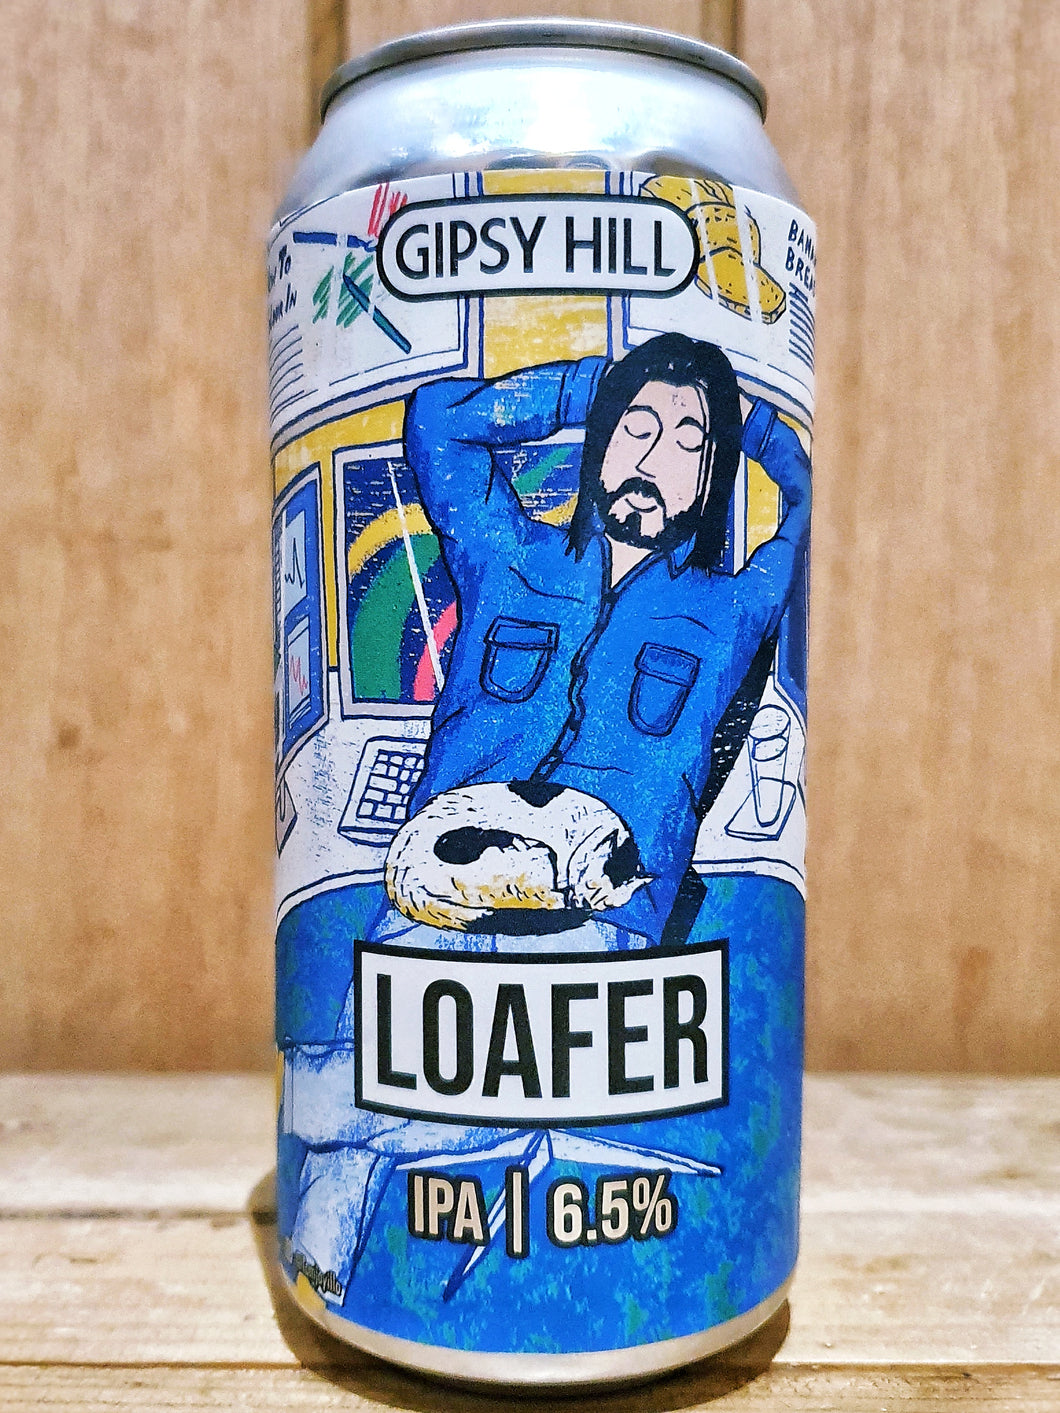 Gipsy Hill	- Loafer